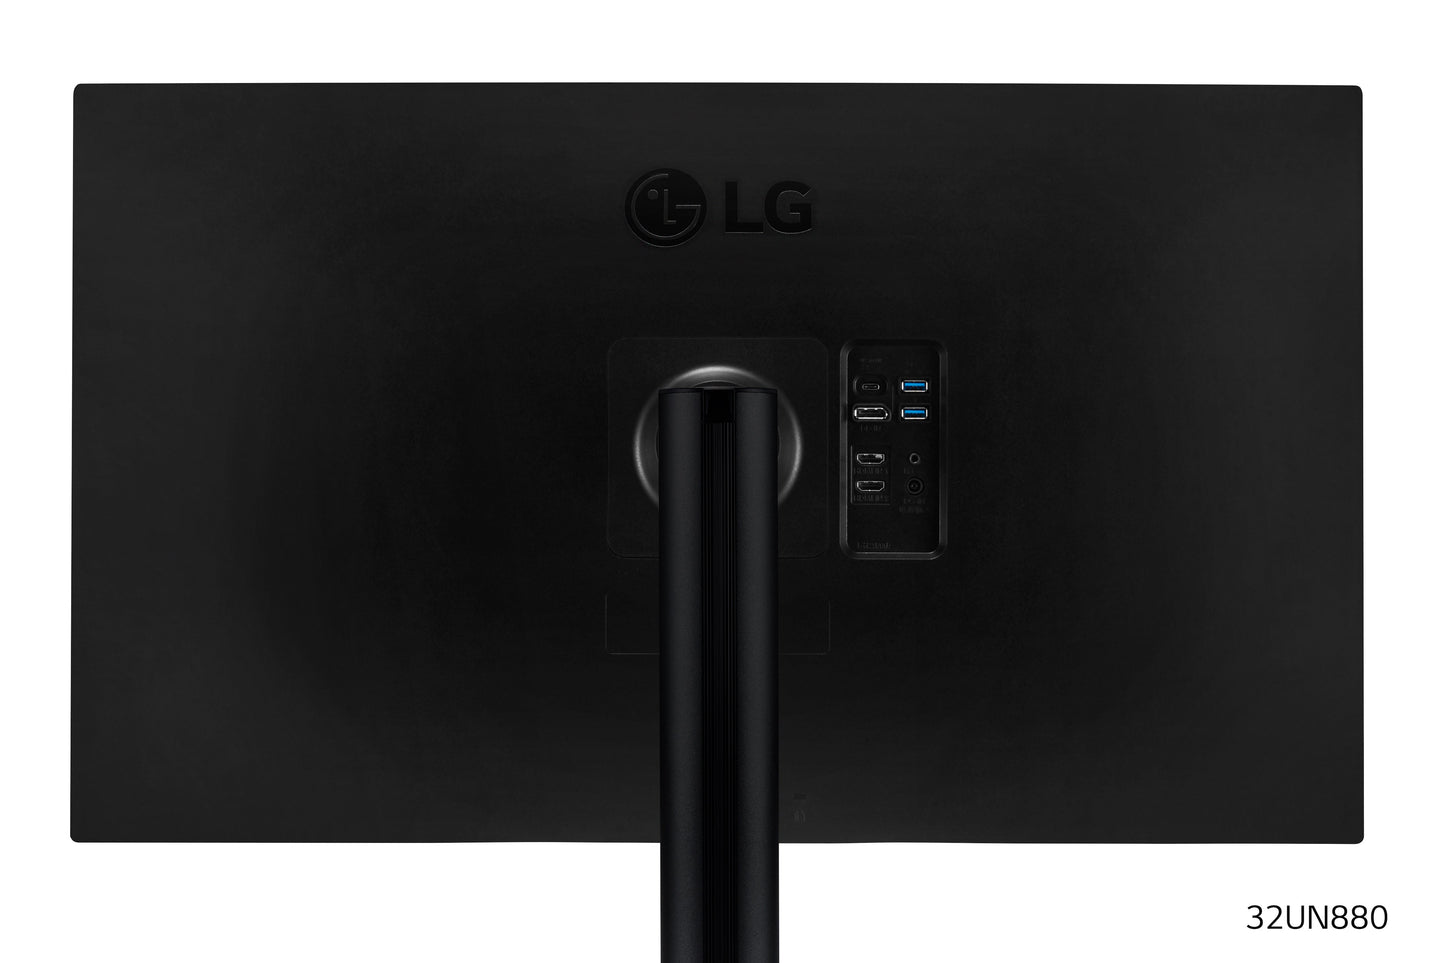 LG 32" UltraFine 4K Monitor 32UN880, schwarz